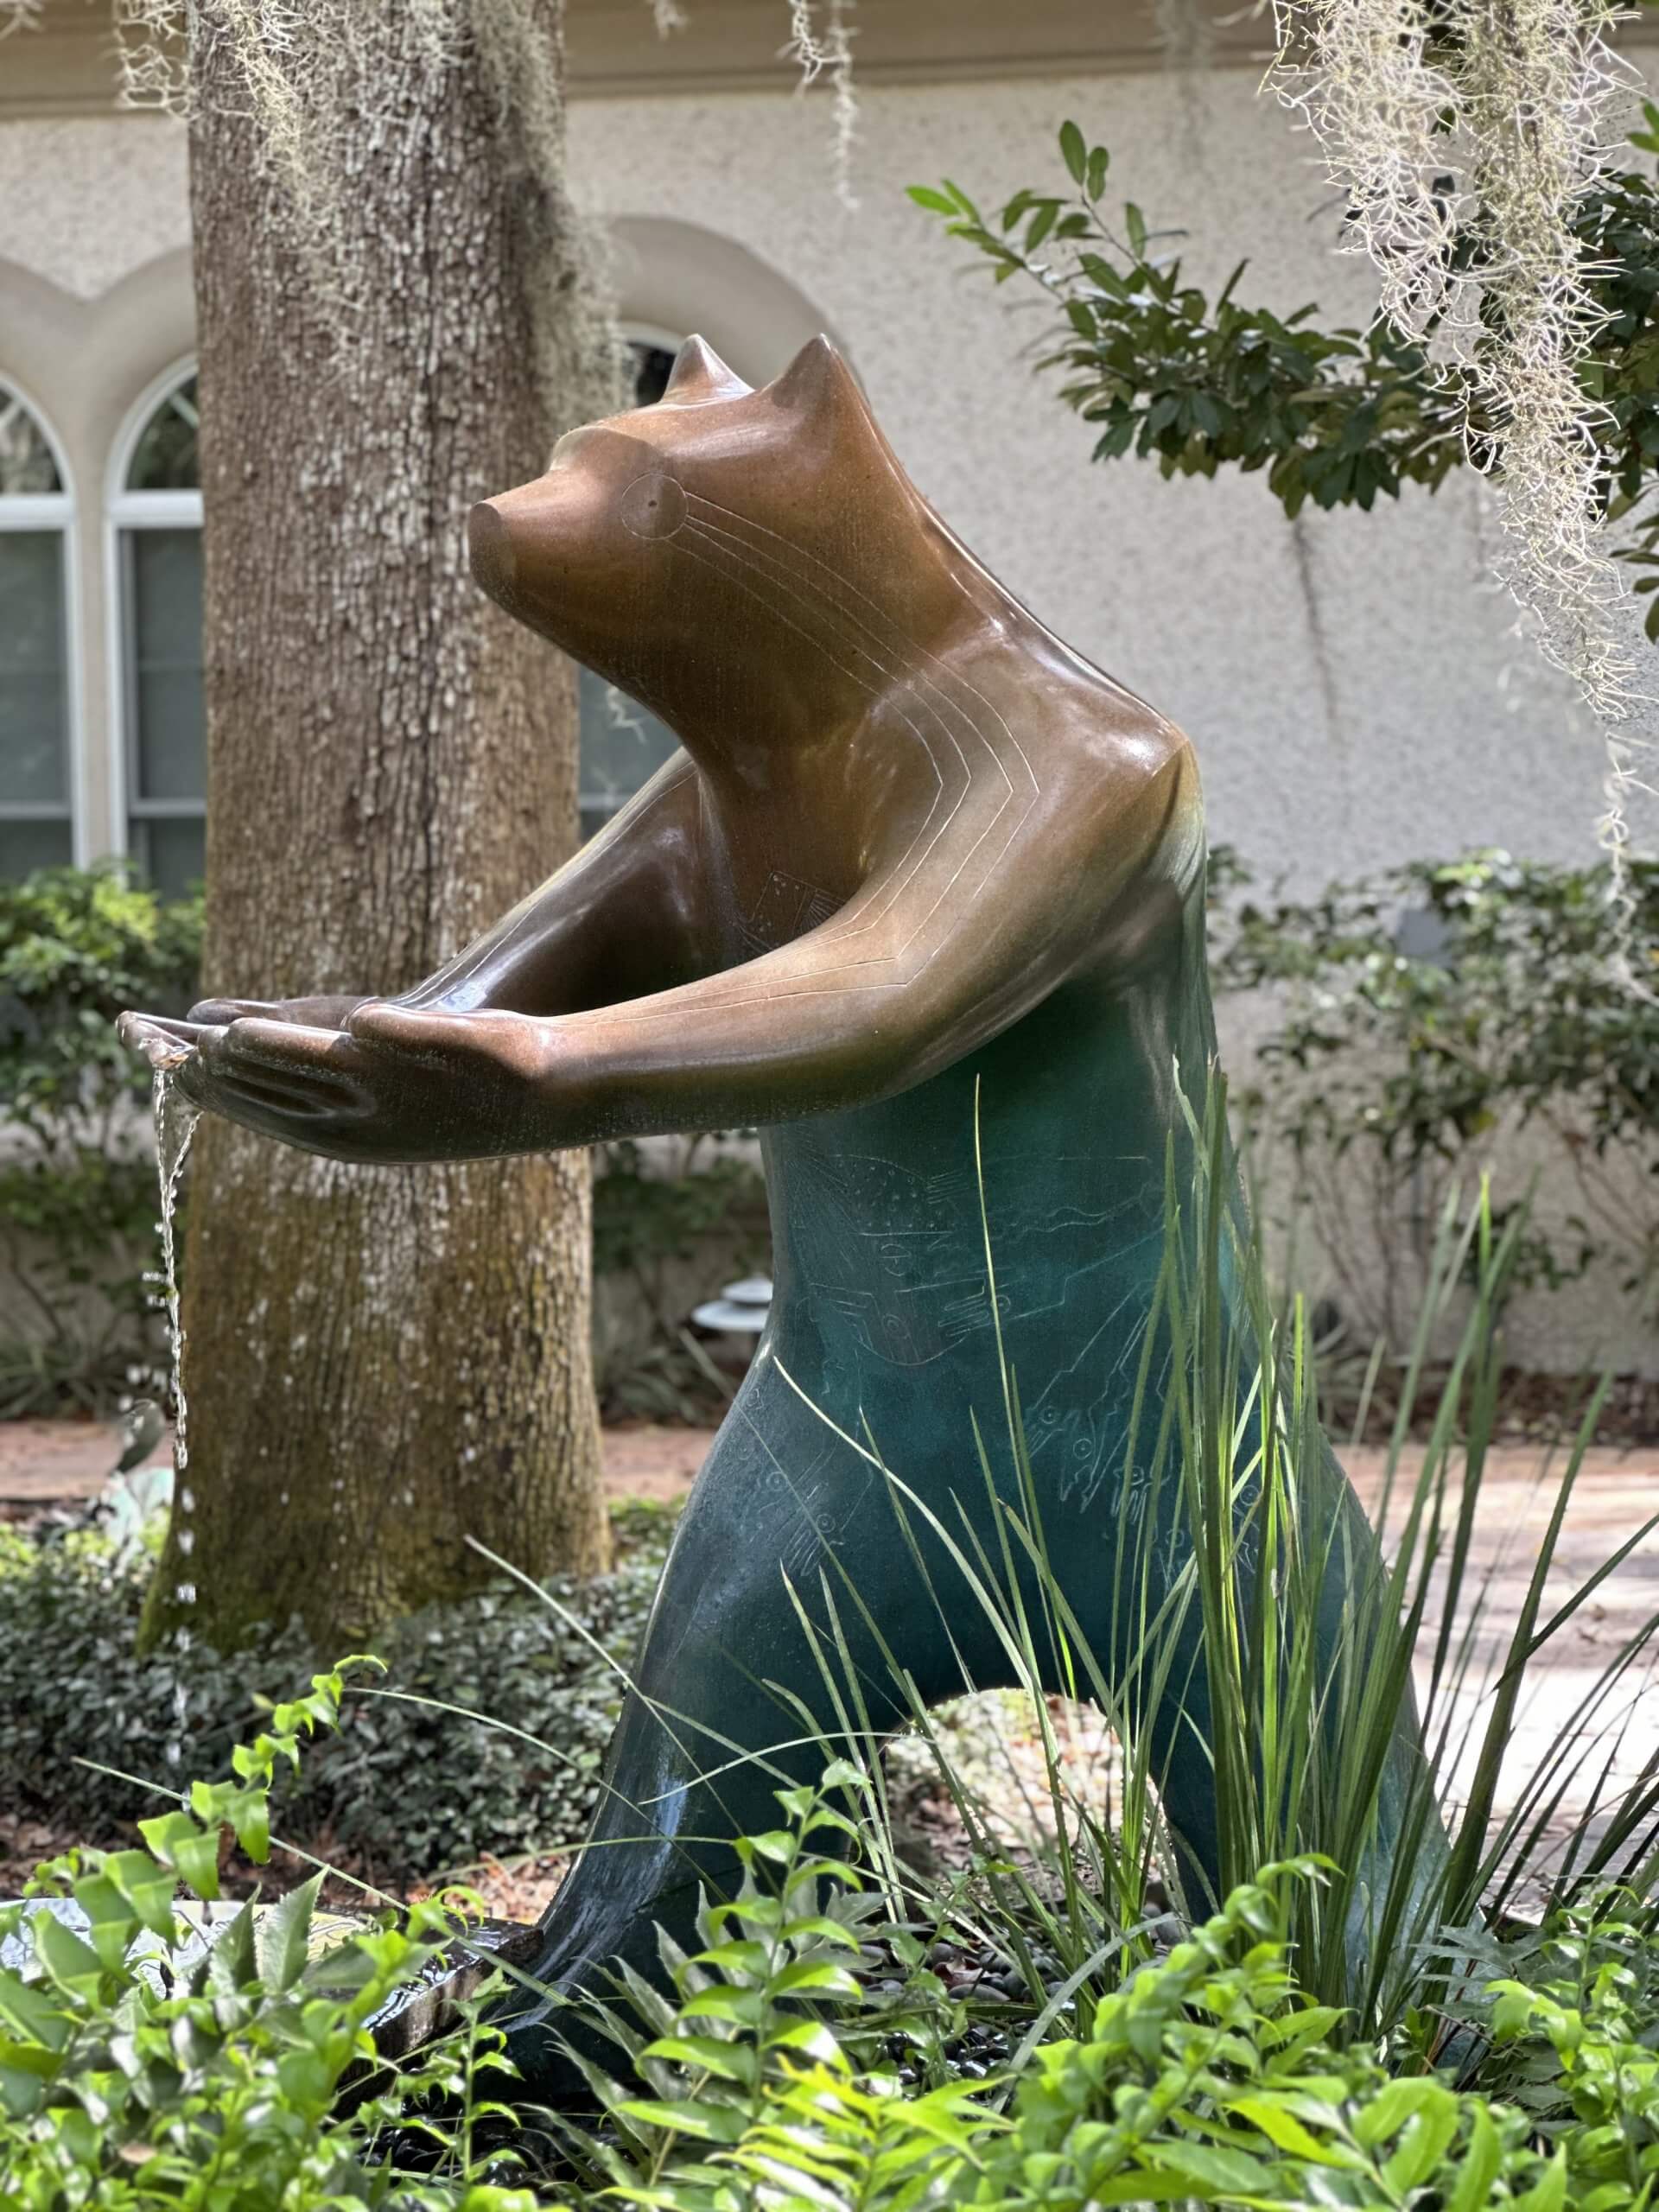 Bear sculpture fountain 